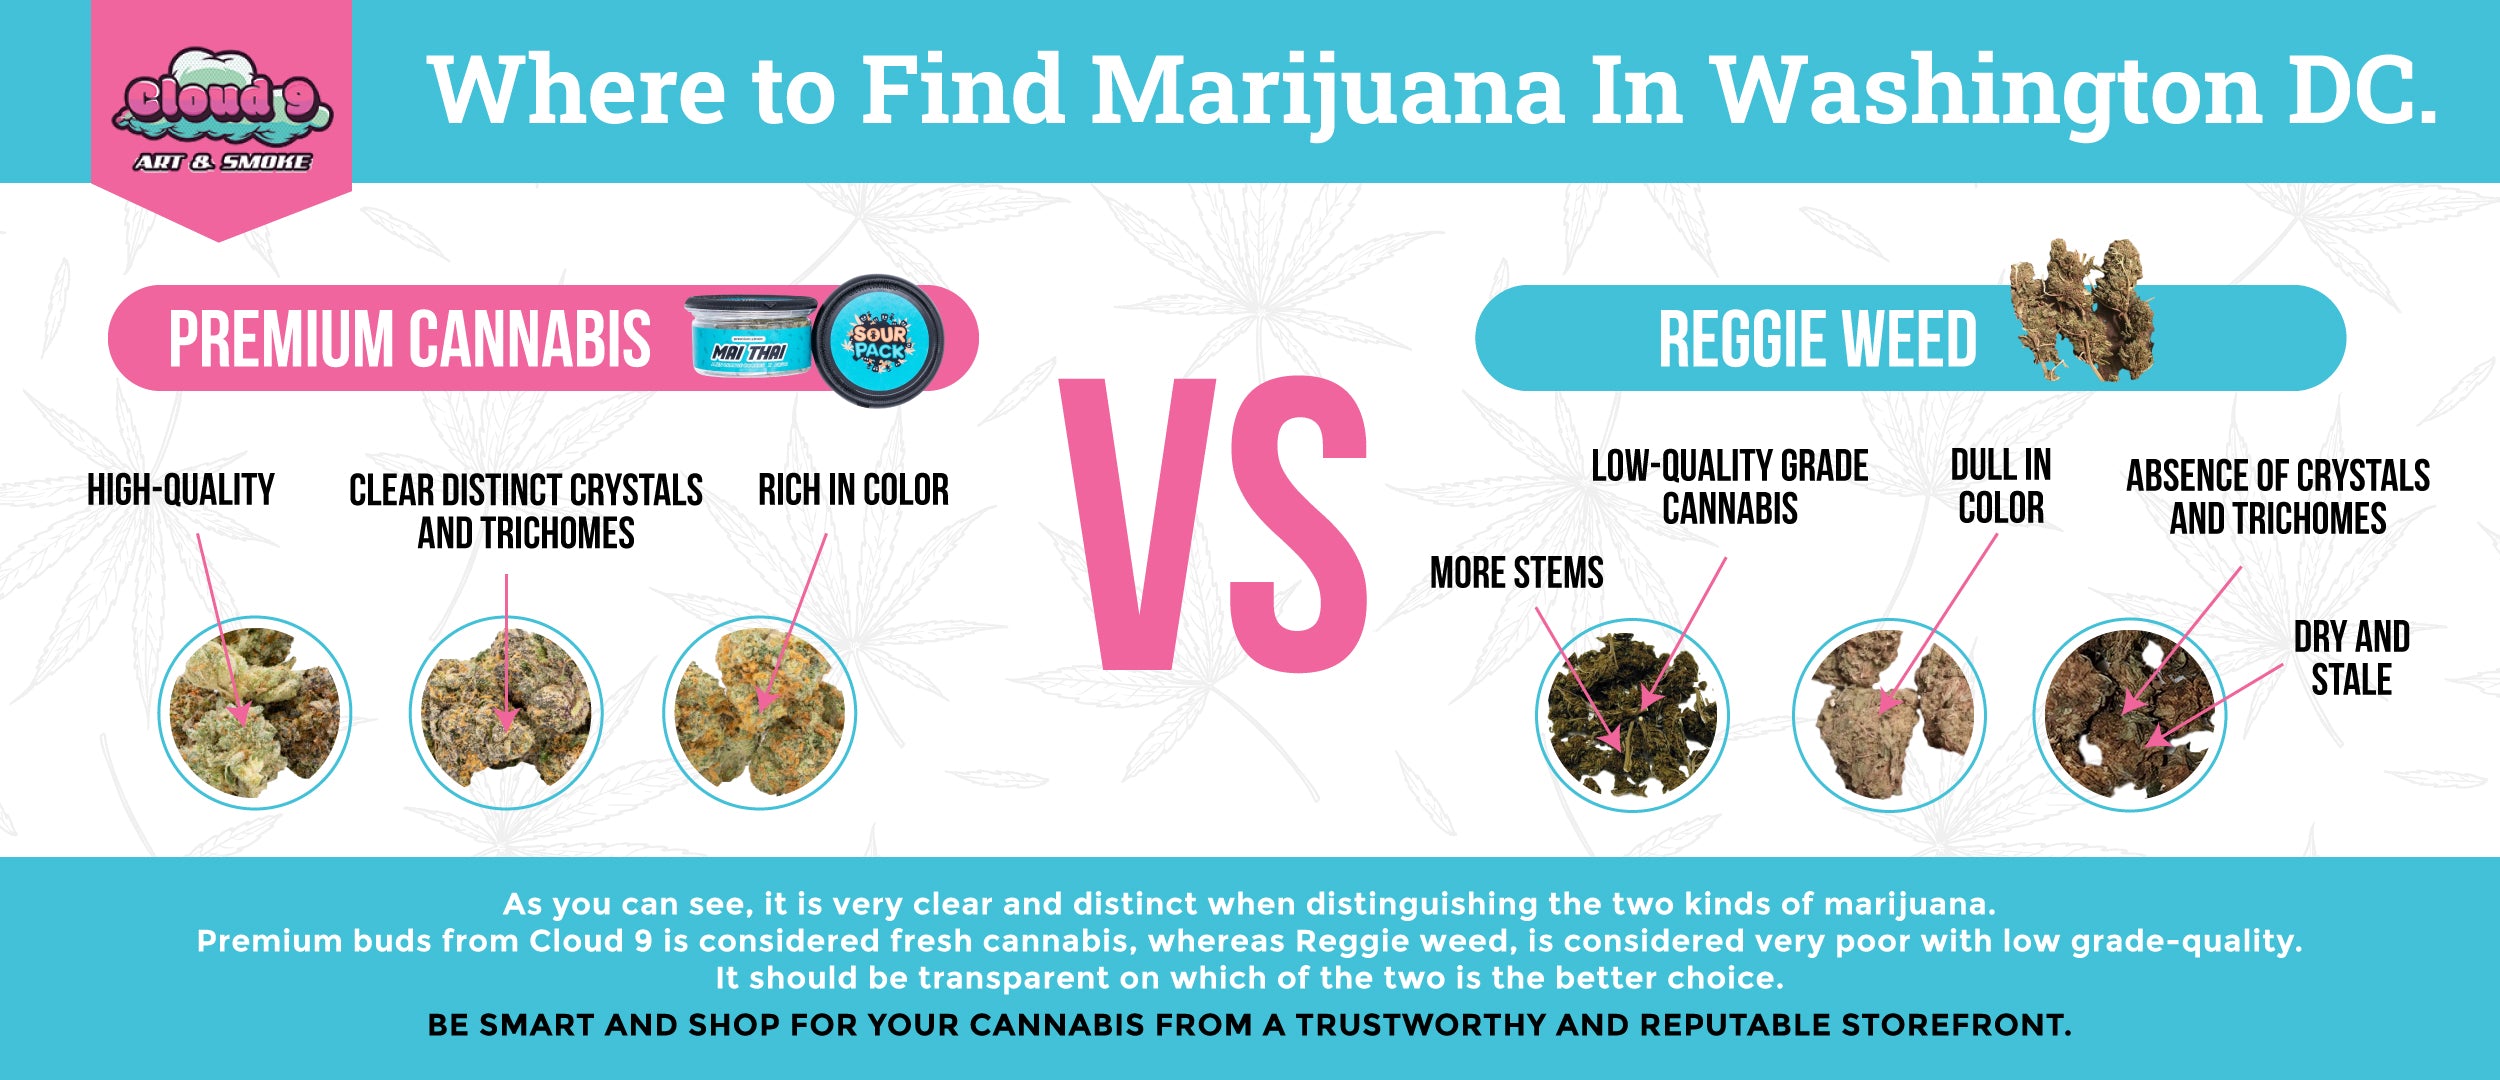 where to find marijuana in washington dc